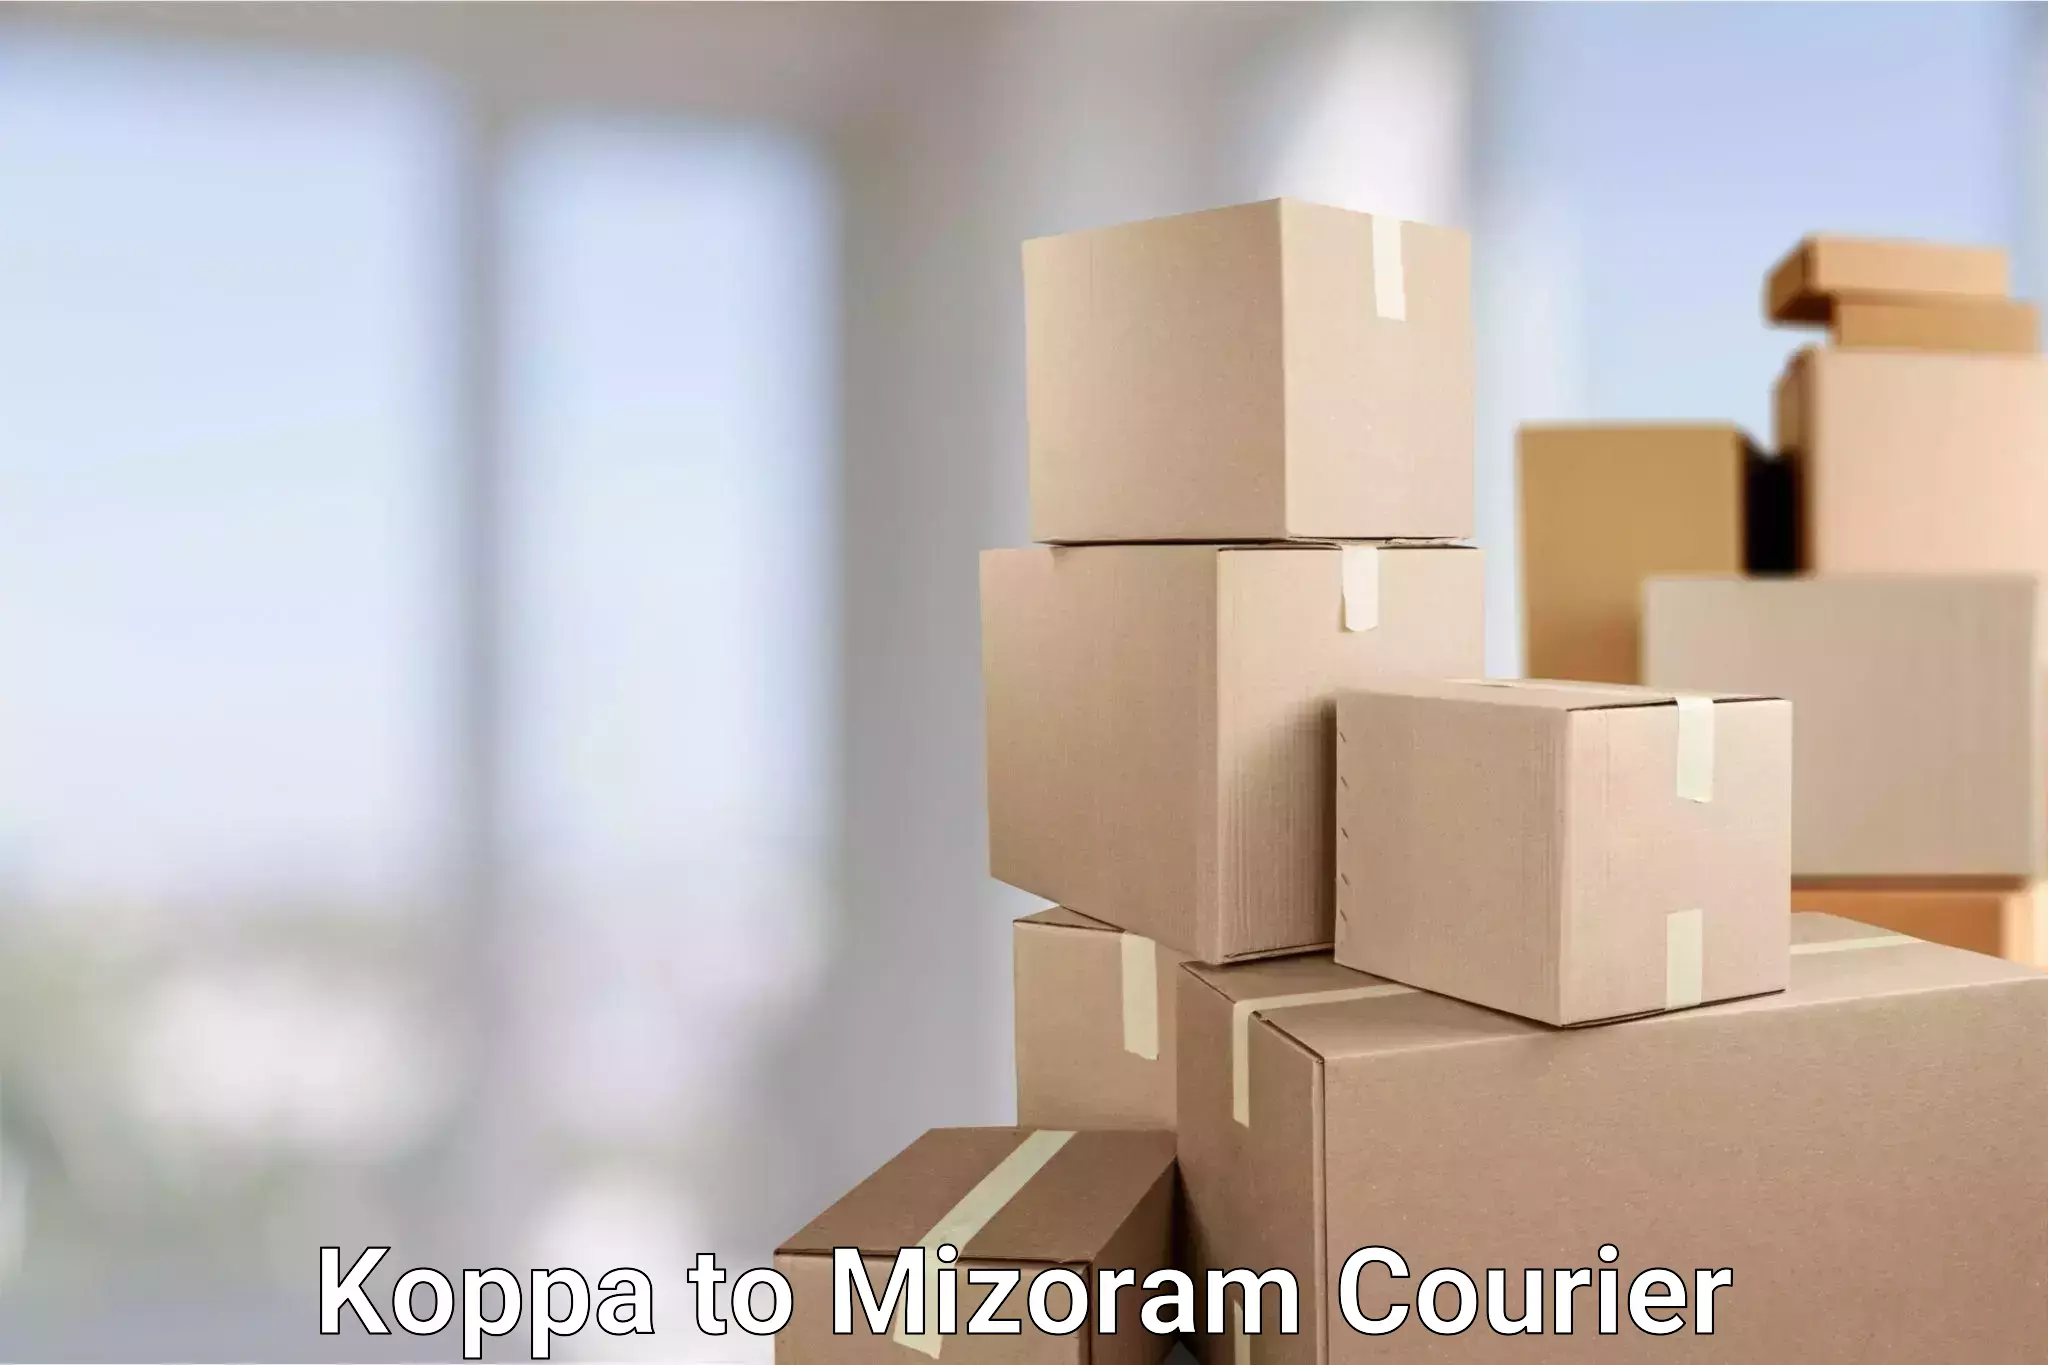 Express delivery capabilities Koppa to Mizoram